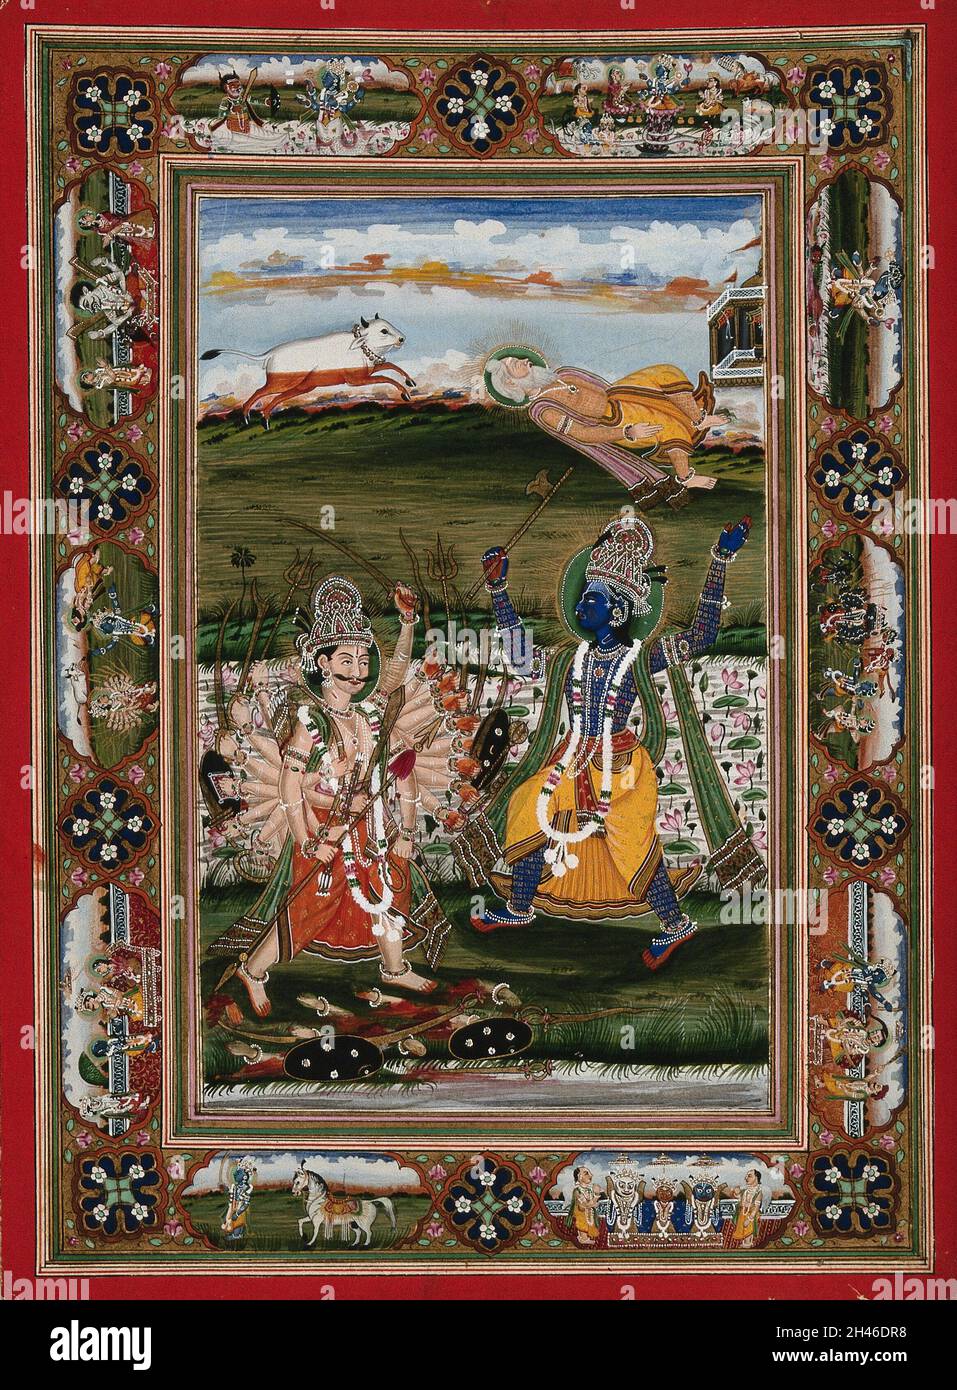 Vishnu in his incarnation as Parasurama, a Brahman (priest) in battle with Kartavirya, a Kshatriya king, to prove the supremacy of Brahmans over Kshatriyas (kings and warriors). Gouache painting by an Indian painter. Stock Photo